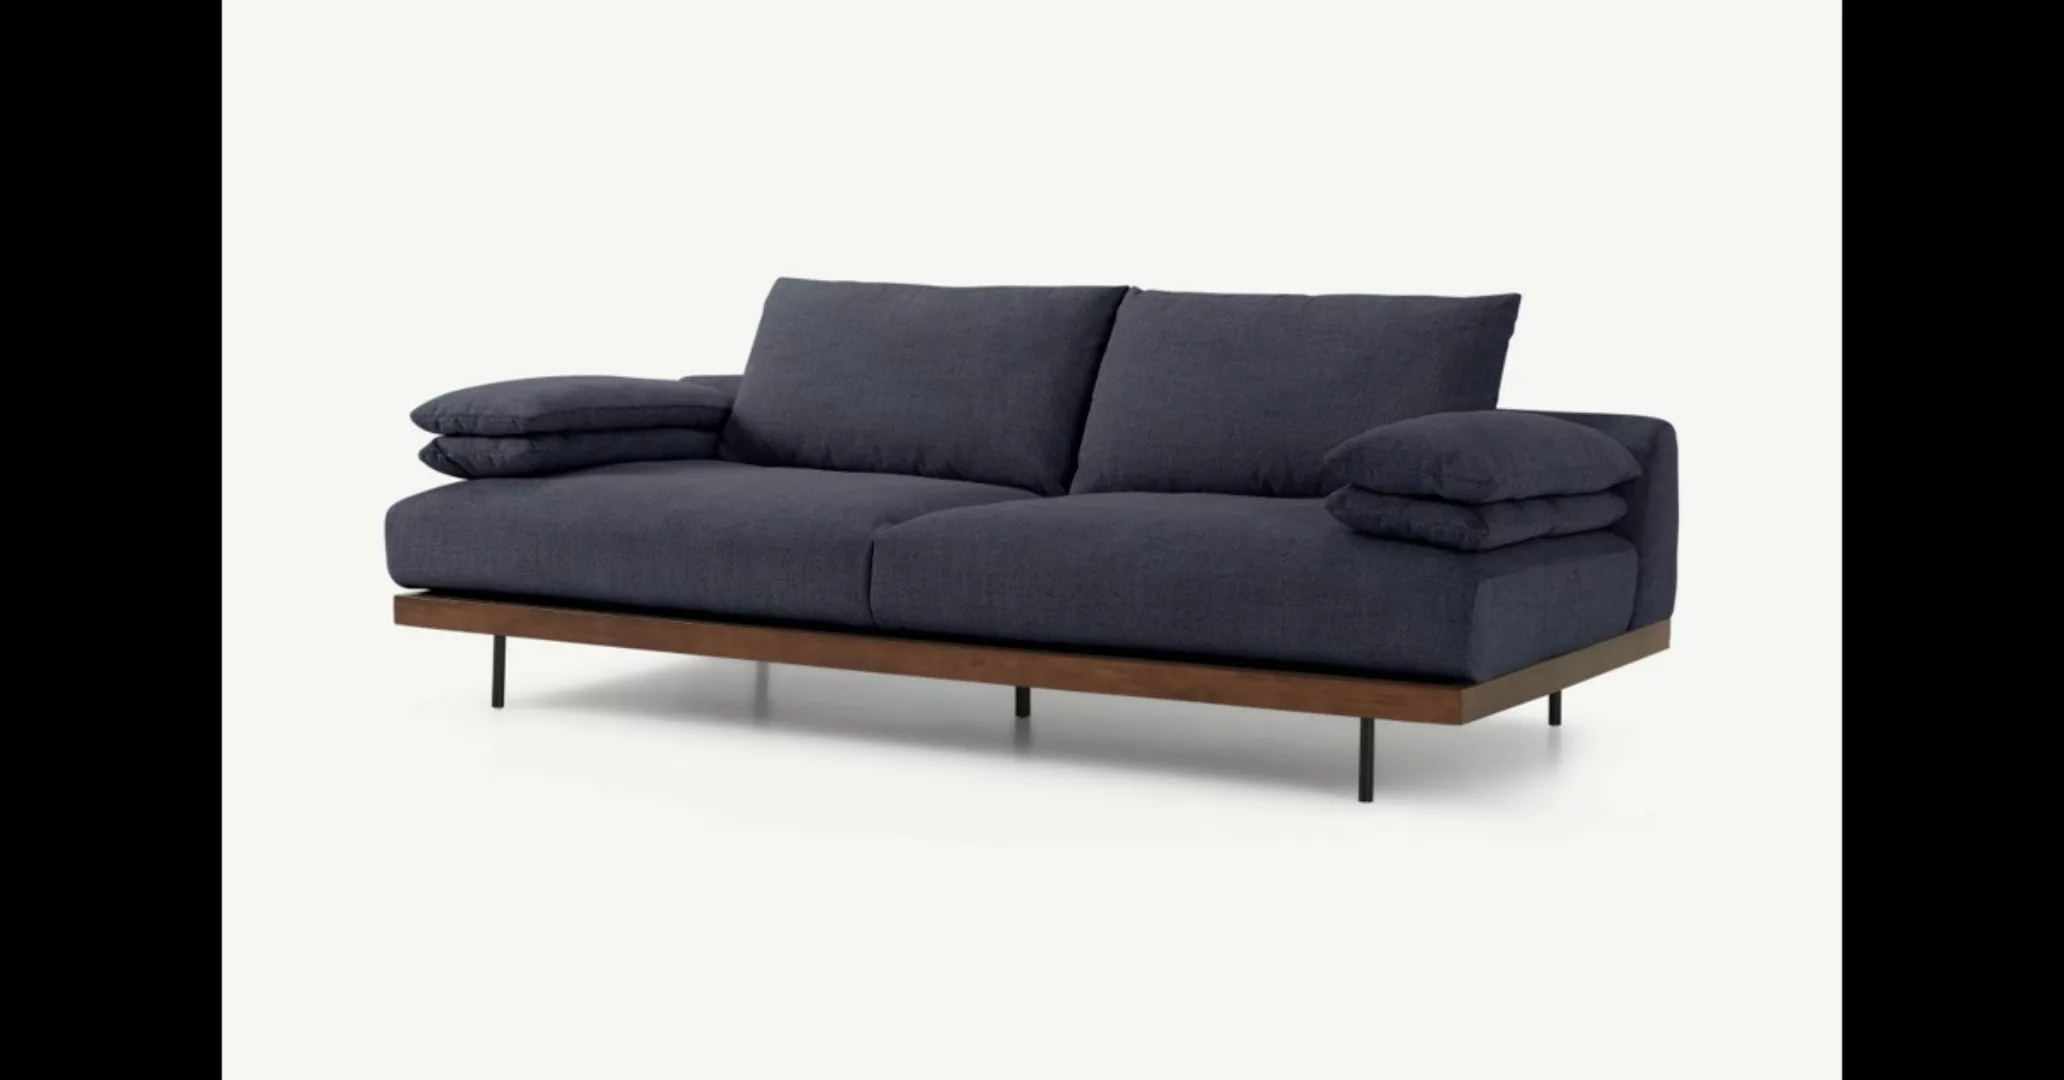 Zita 3-Sitzer Sofa, Denimblau - MADE.com günstig online kaufen